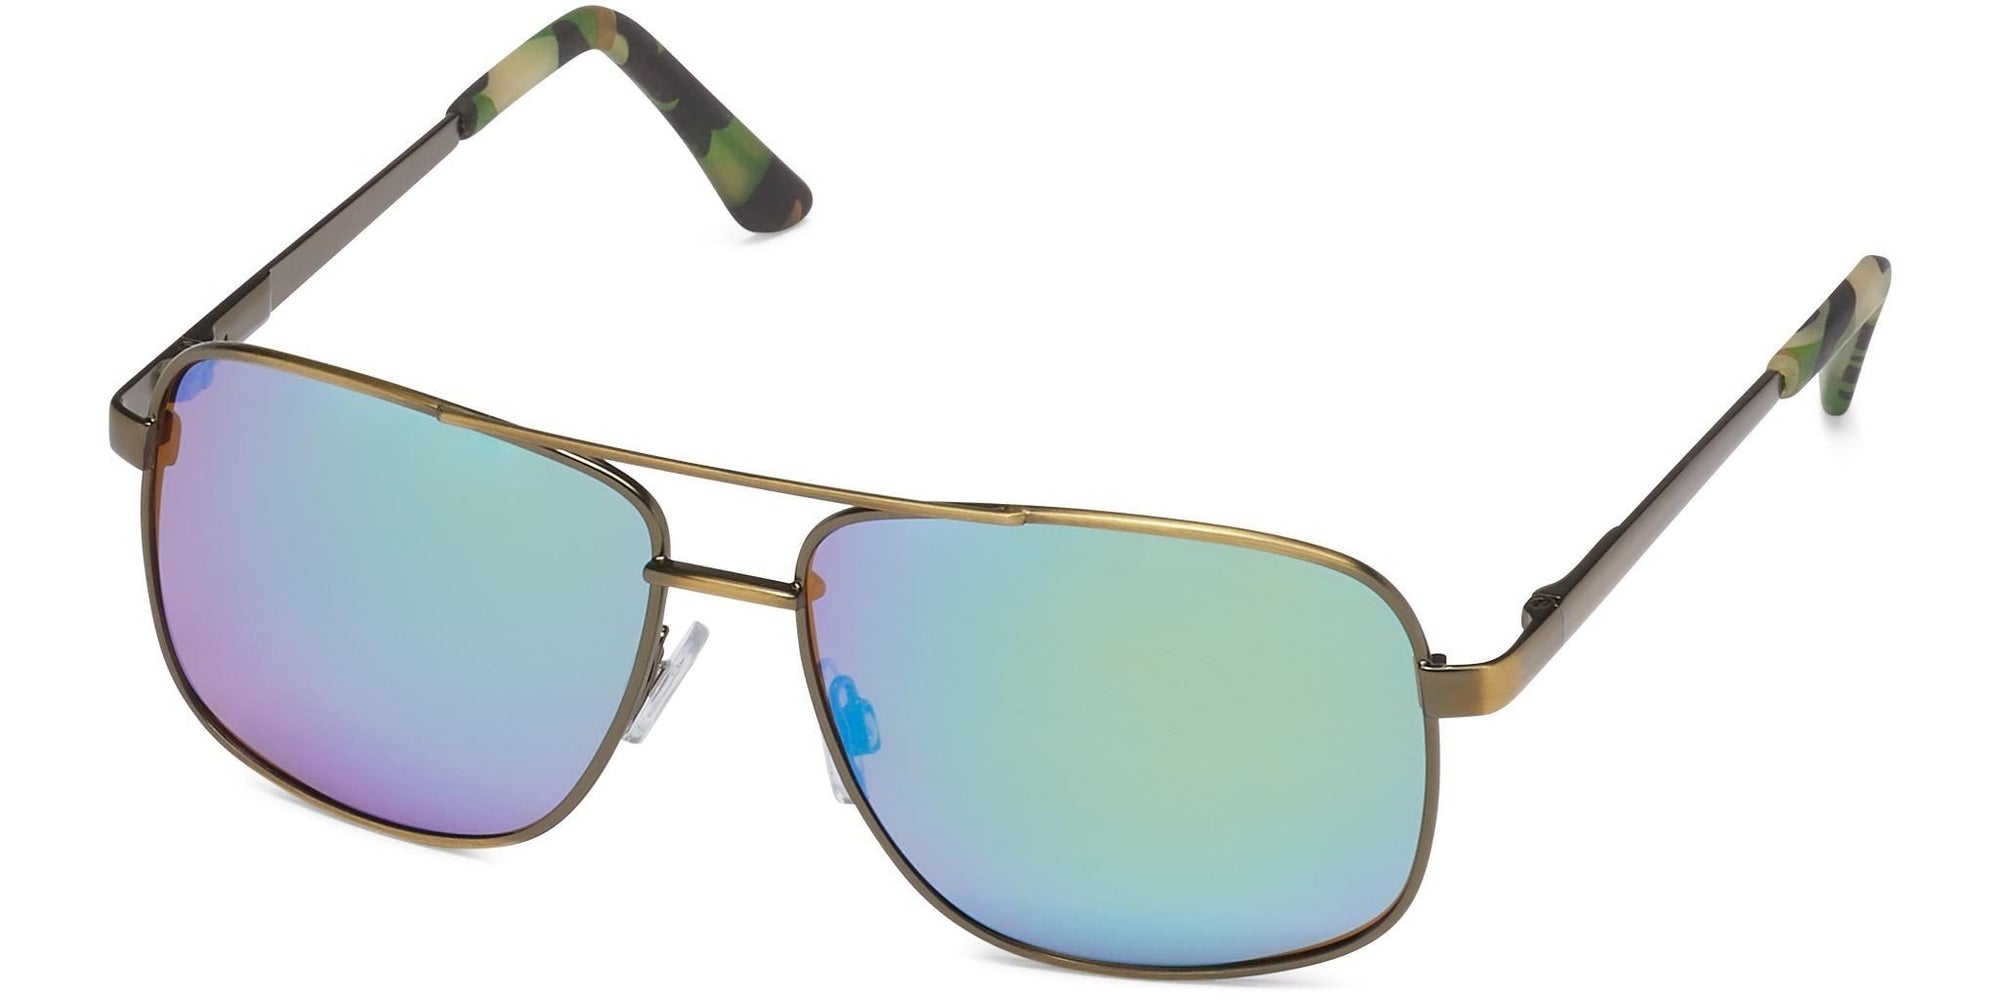 Fisherman Eyewear Grander Polarized Glasses for Fishing, Shiny